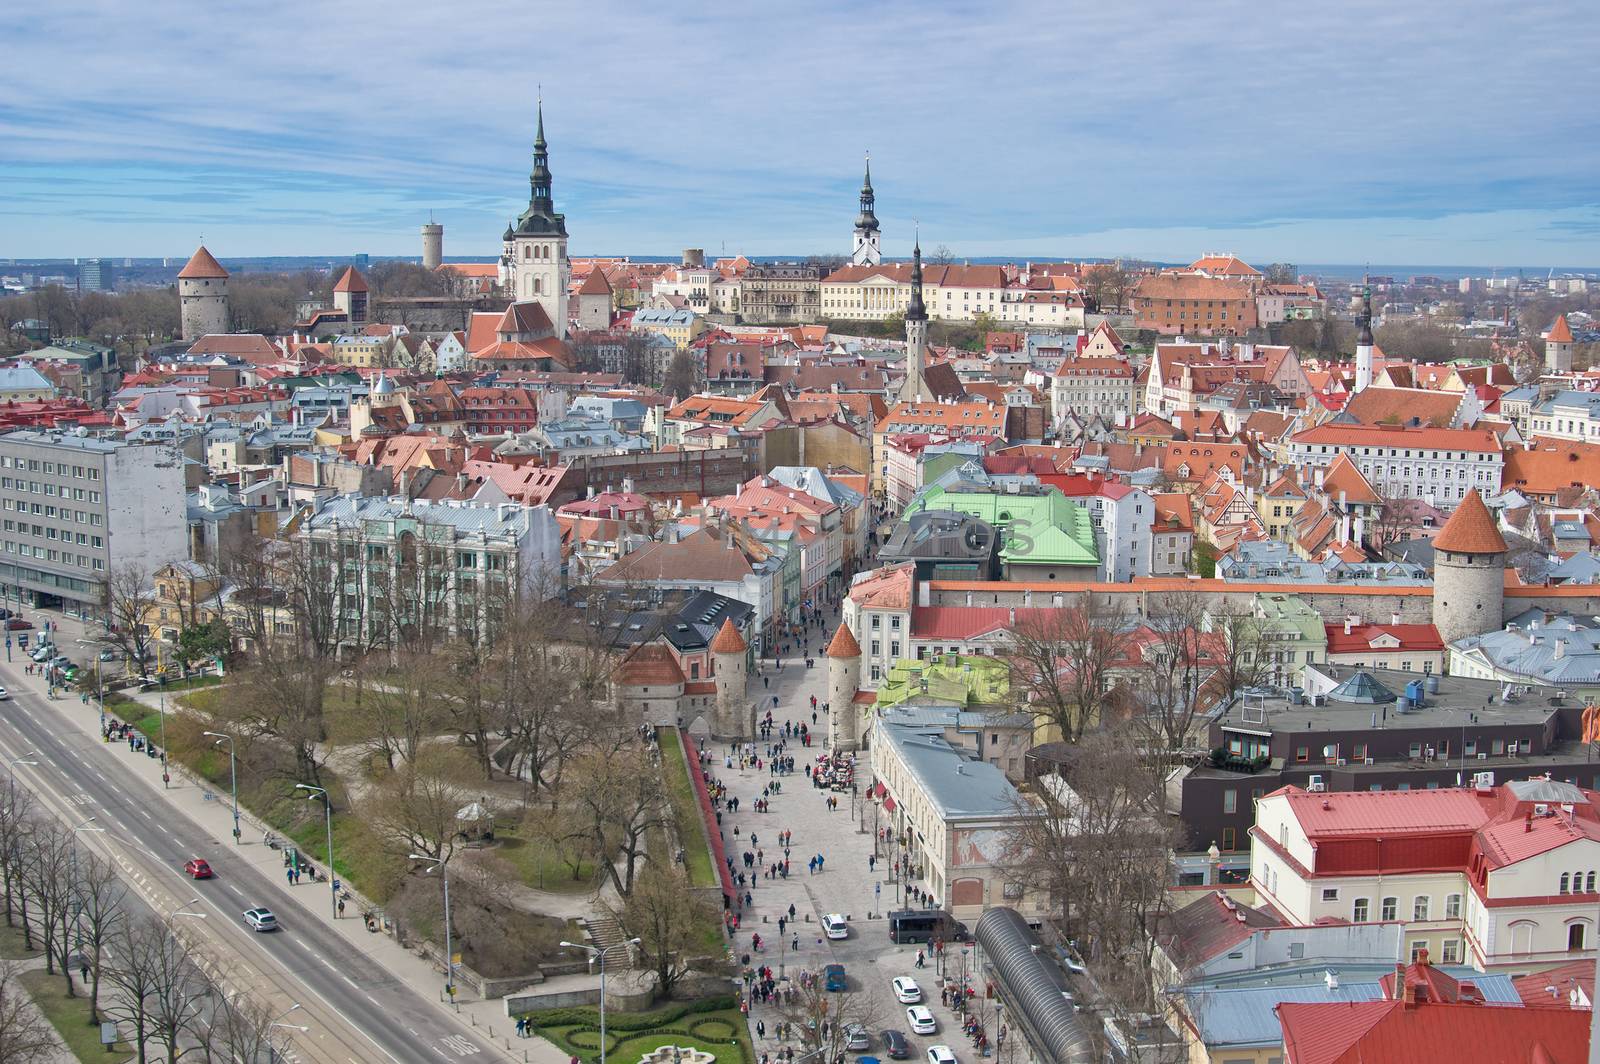 Aerial view of old city of Tallinn and the beginning of Viru street, Estonia